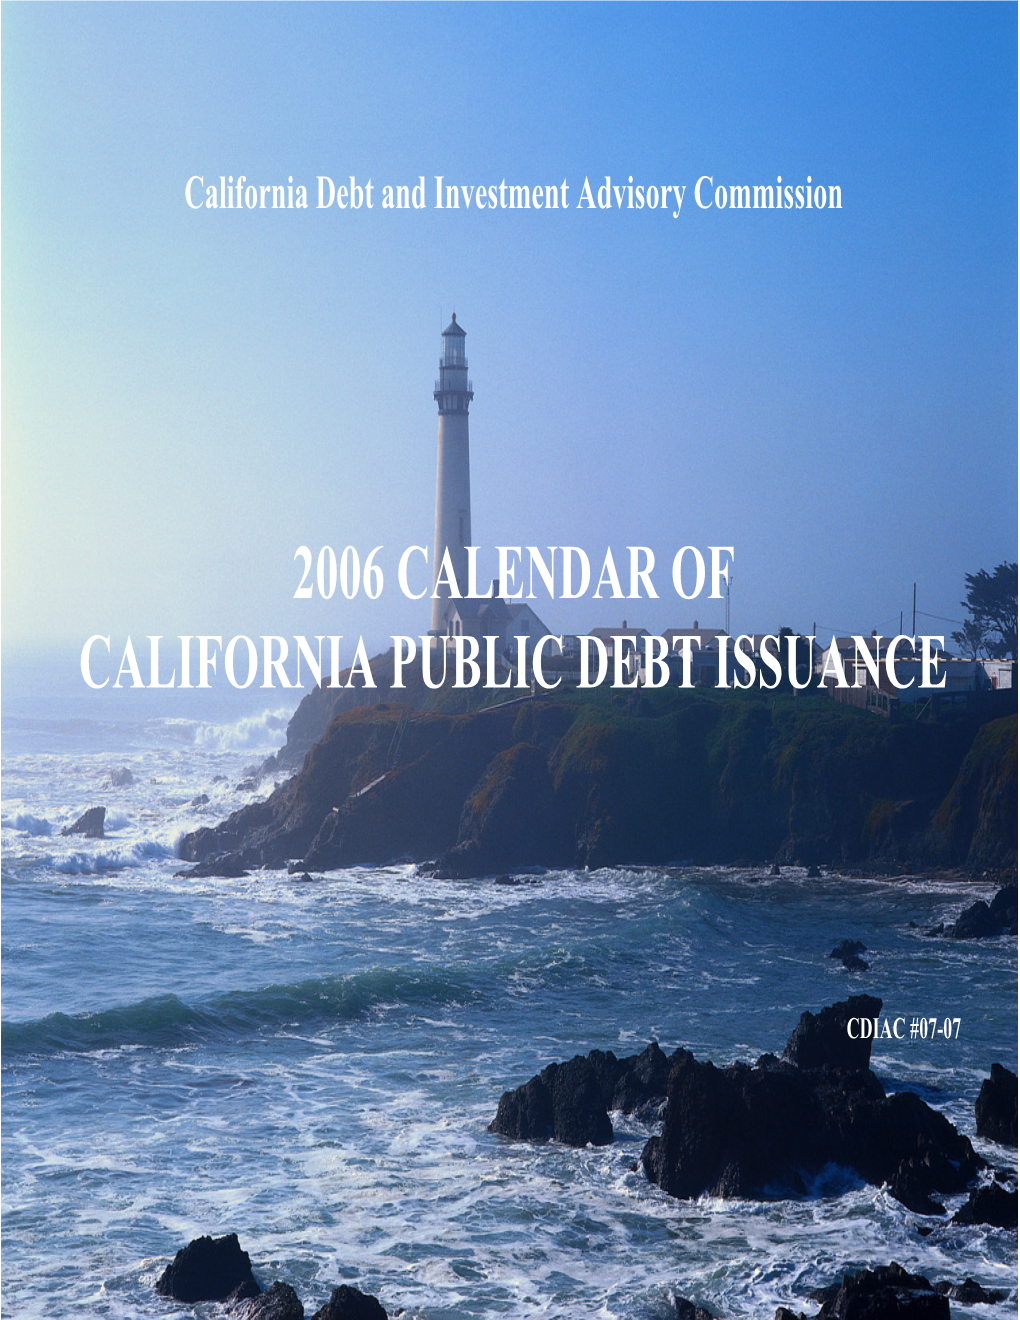 2006 Calendar of California Public Debt Issuance